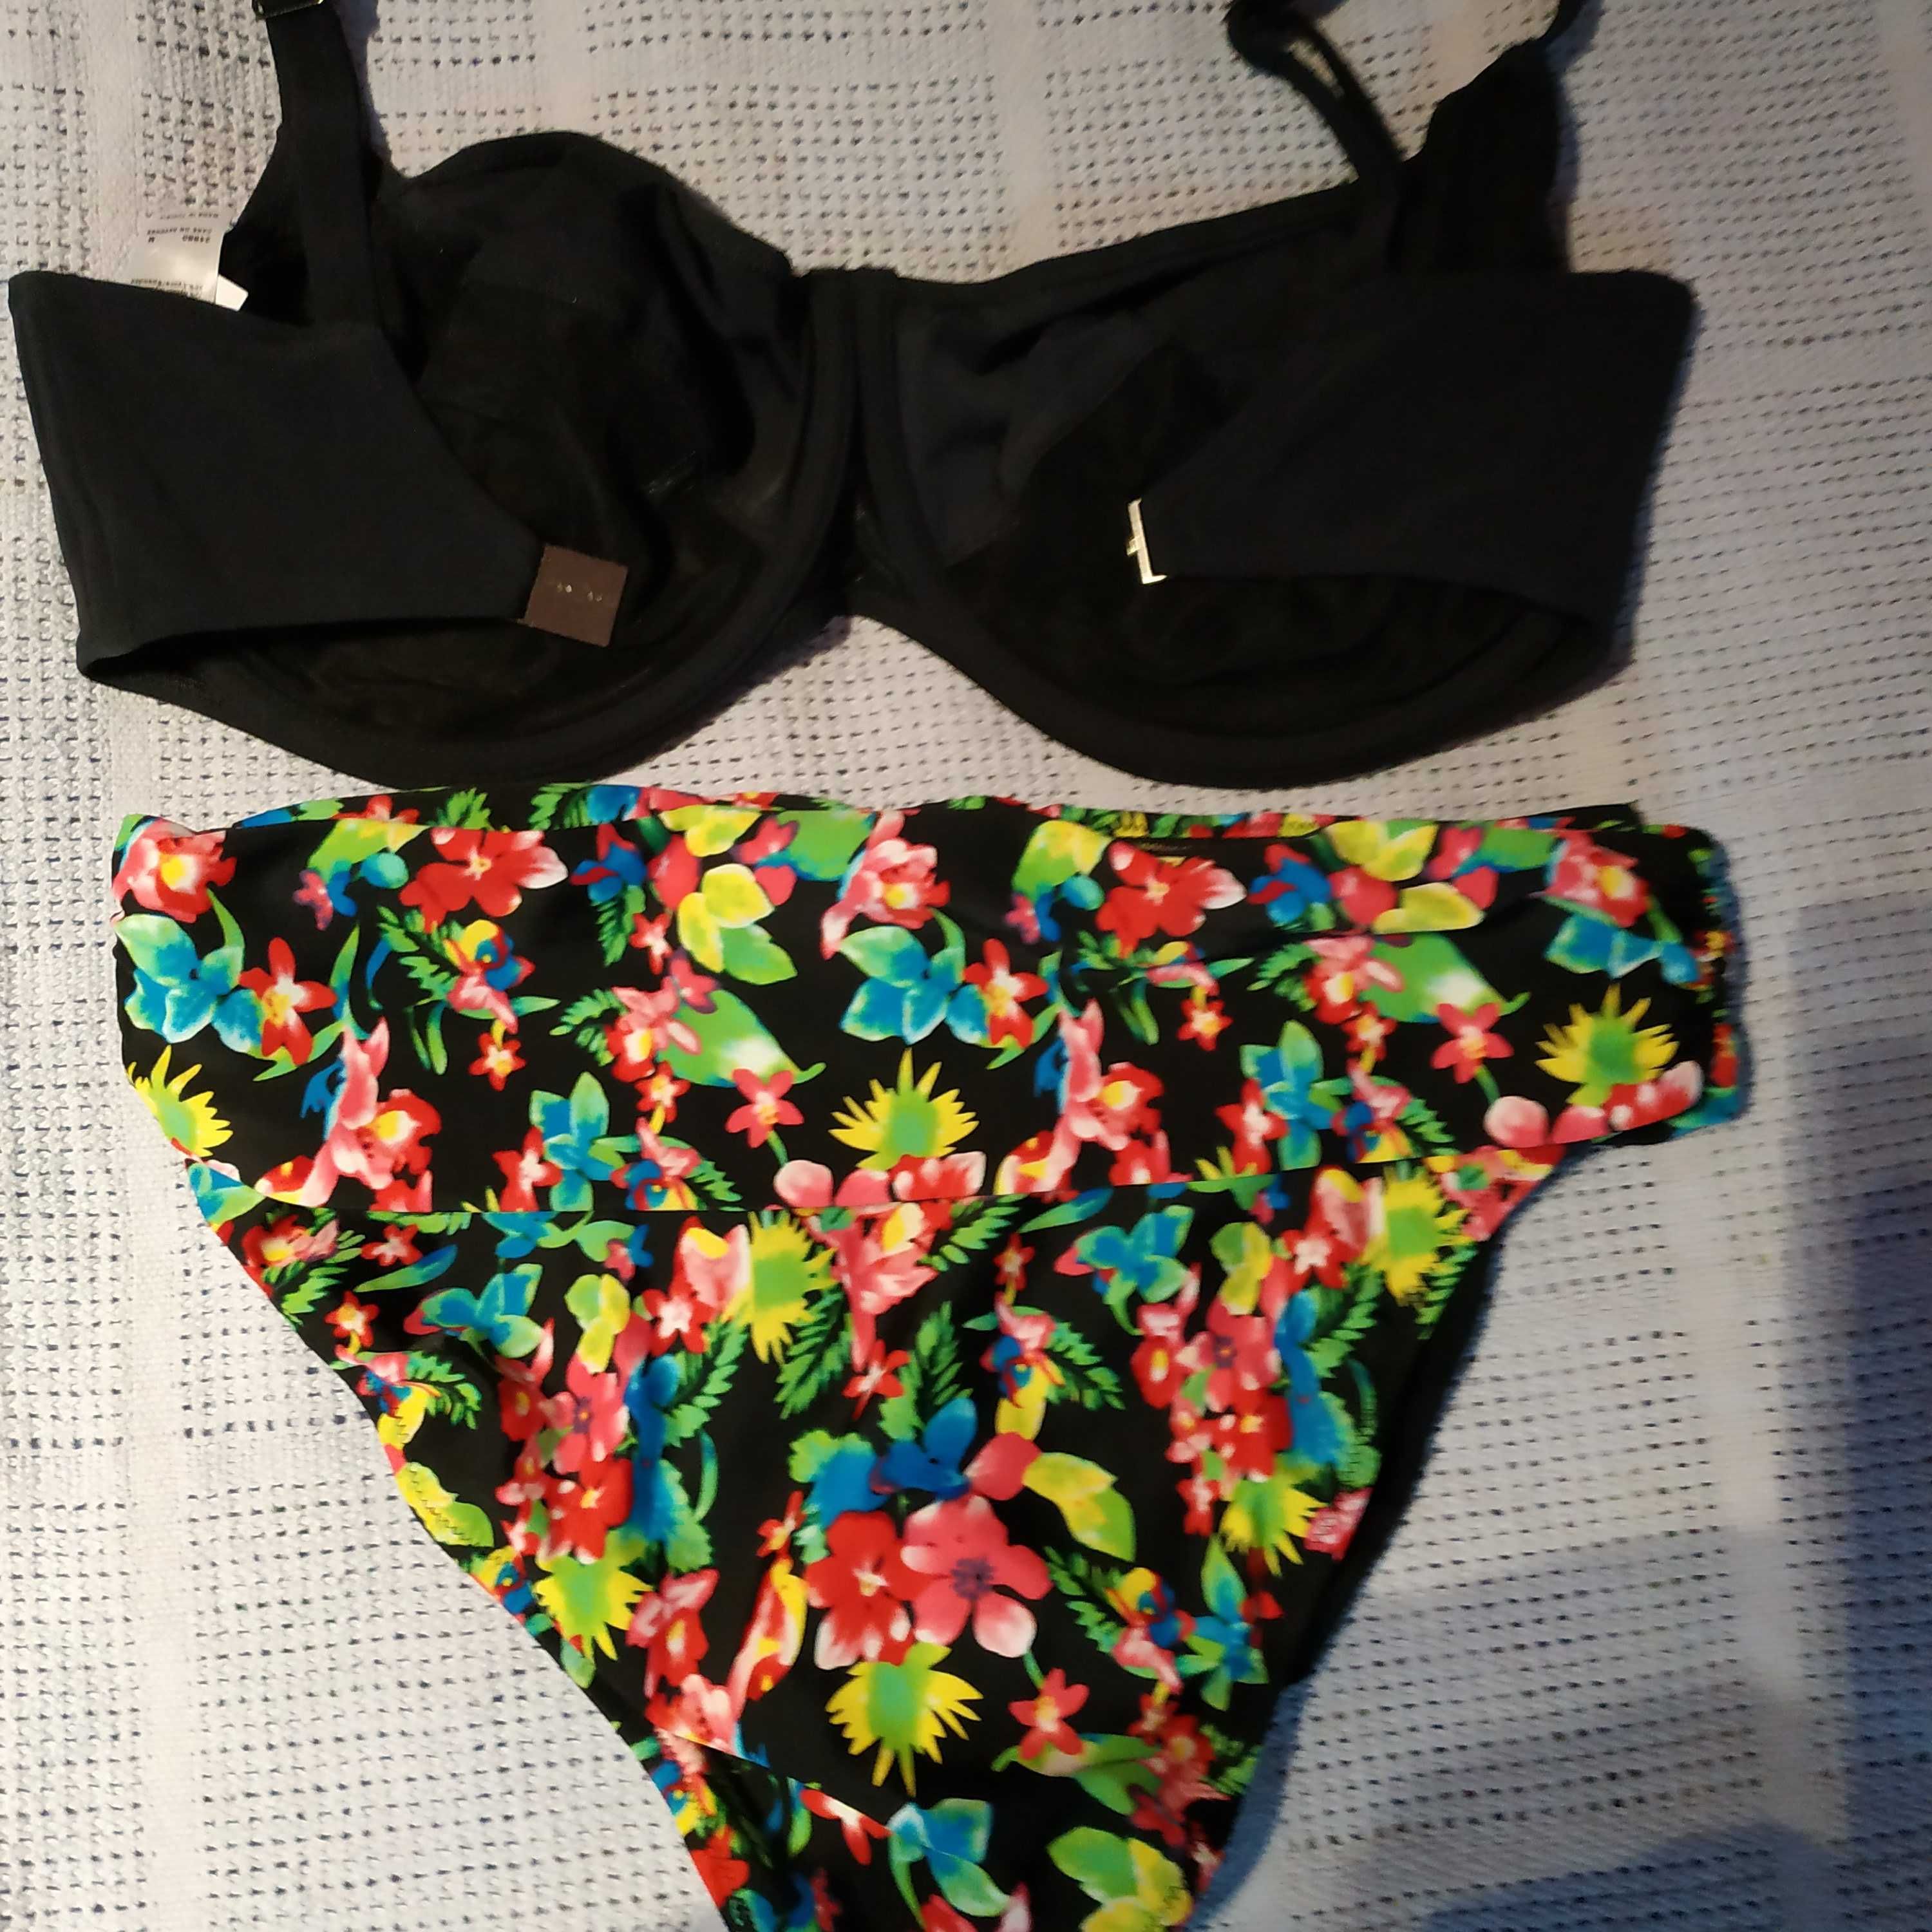 Freya Soda Fantasie Fiji bikini 80H 36H +L/XL Gottex Free